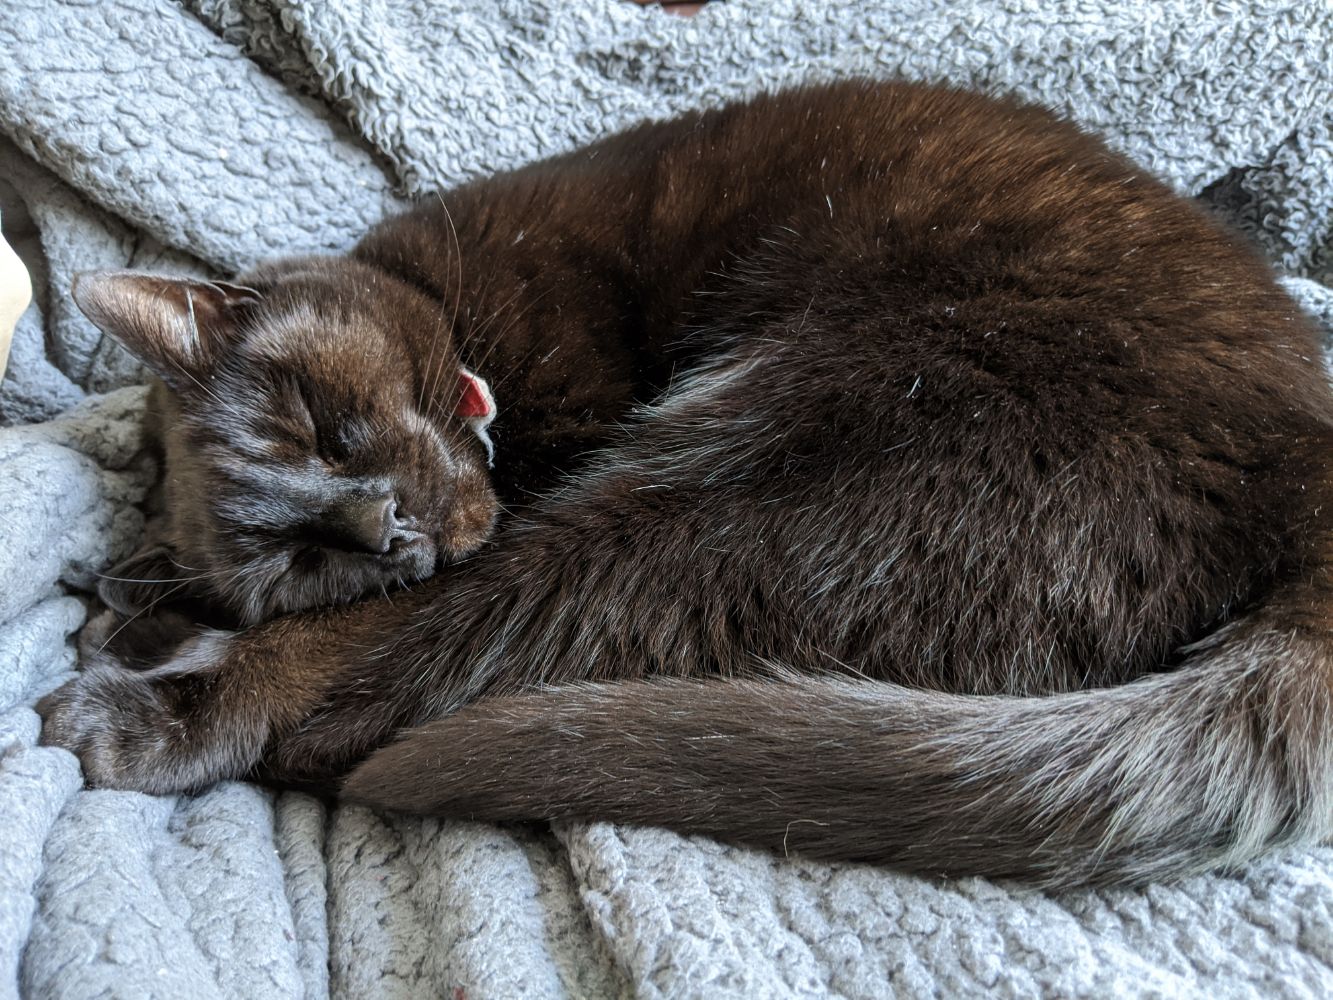 Black cat sleeping on his side, on a grey blanket